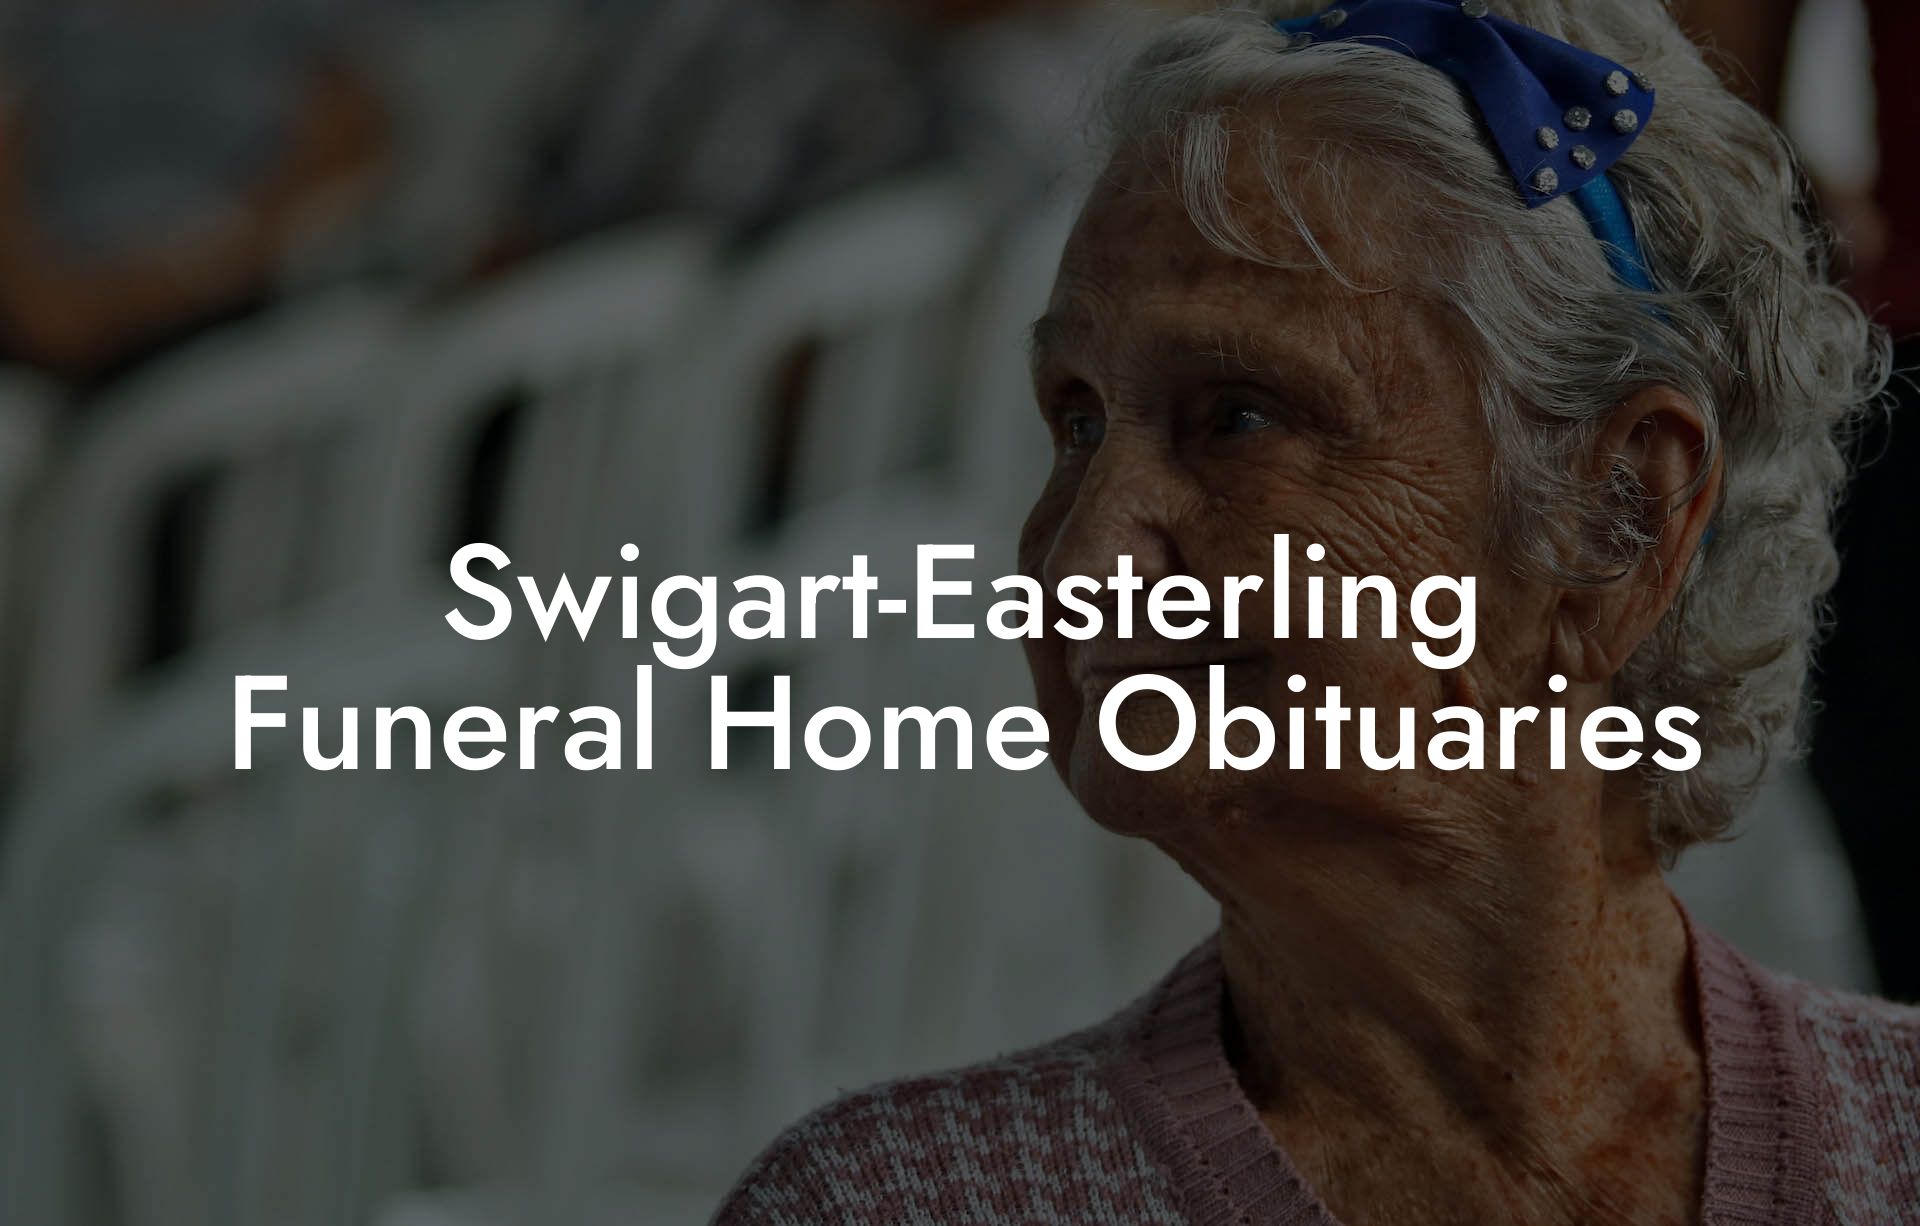 Swigart-Easterling Funeral Home Obituaries